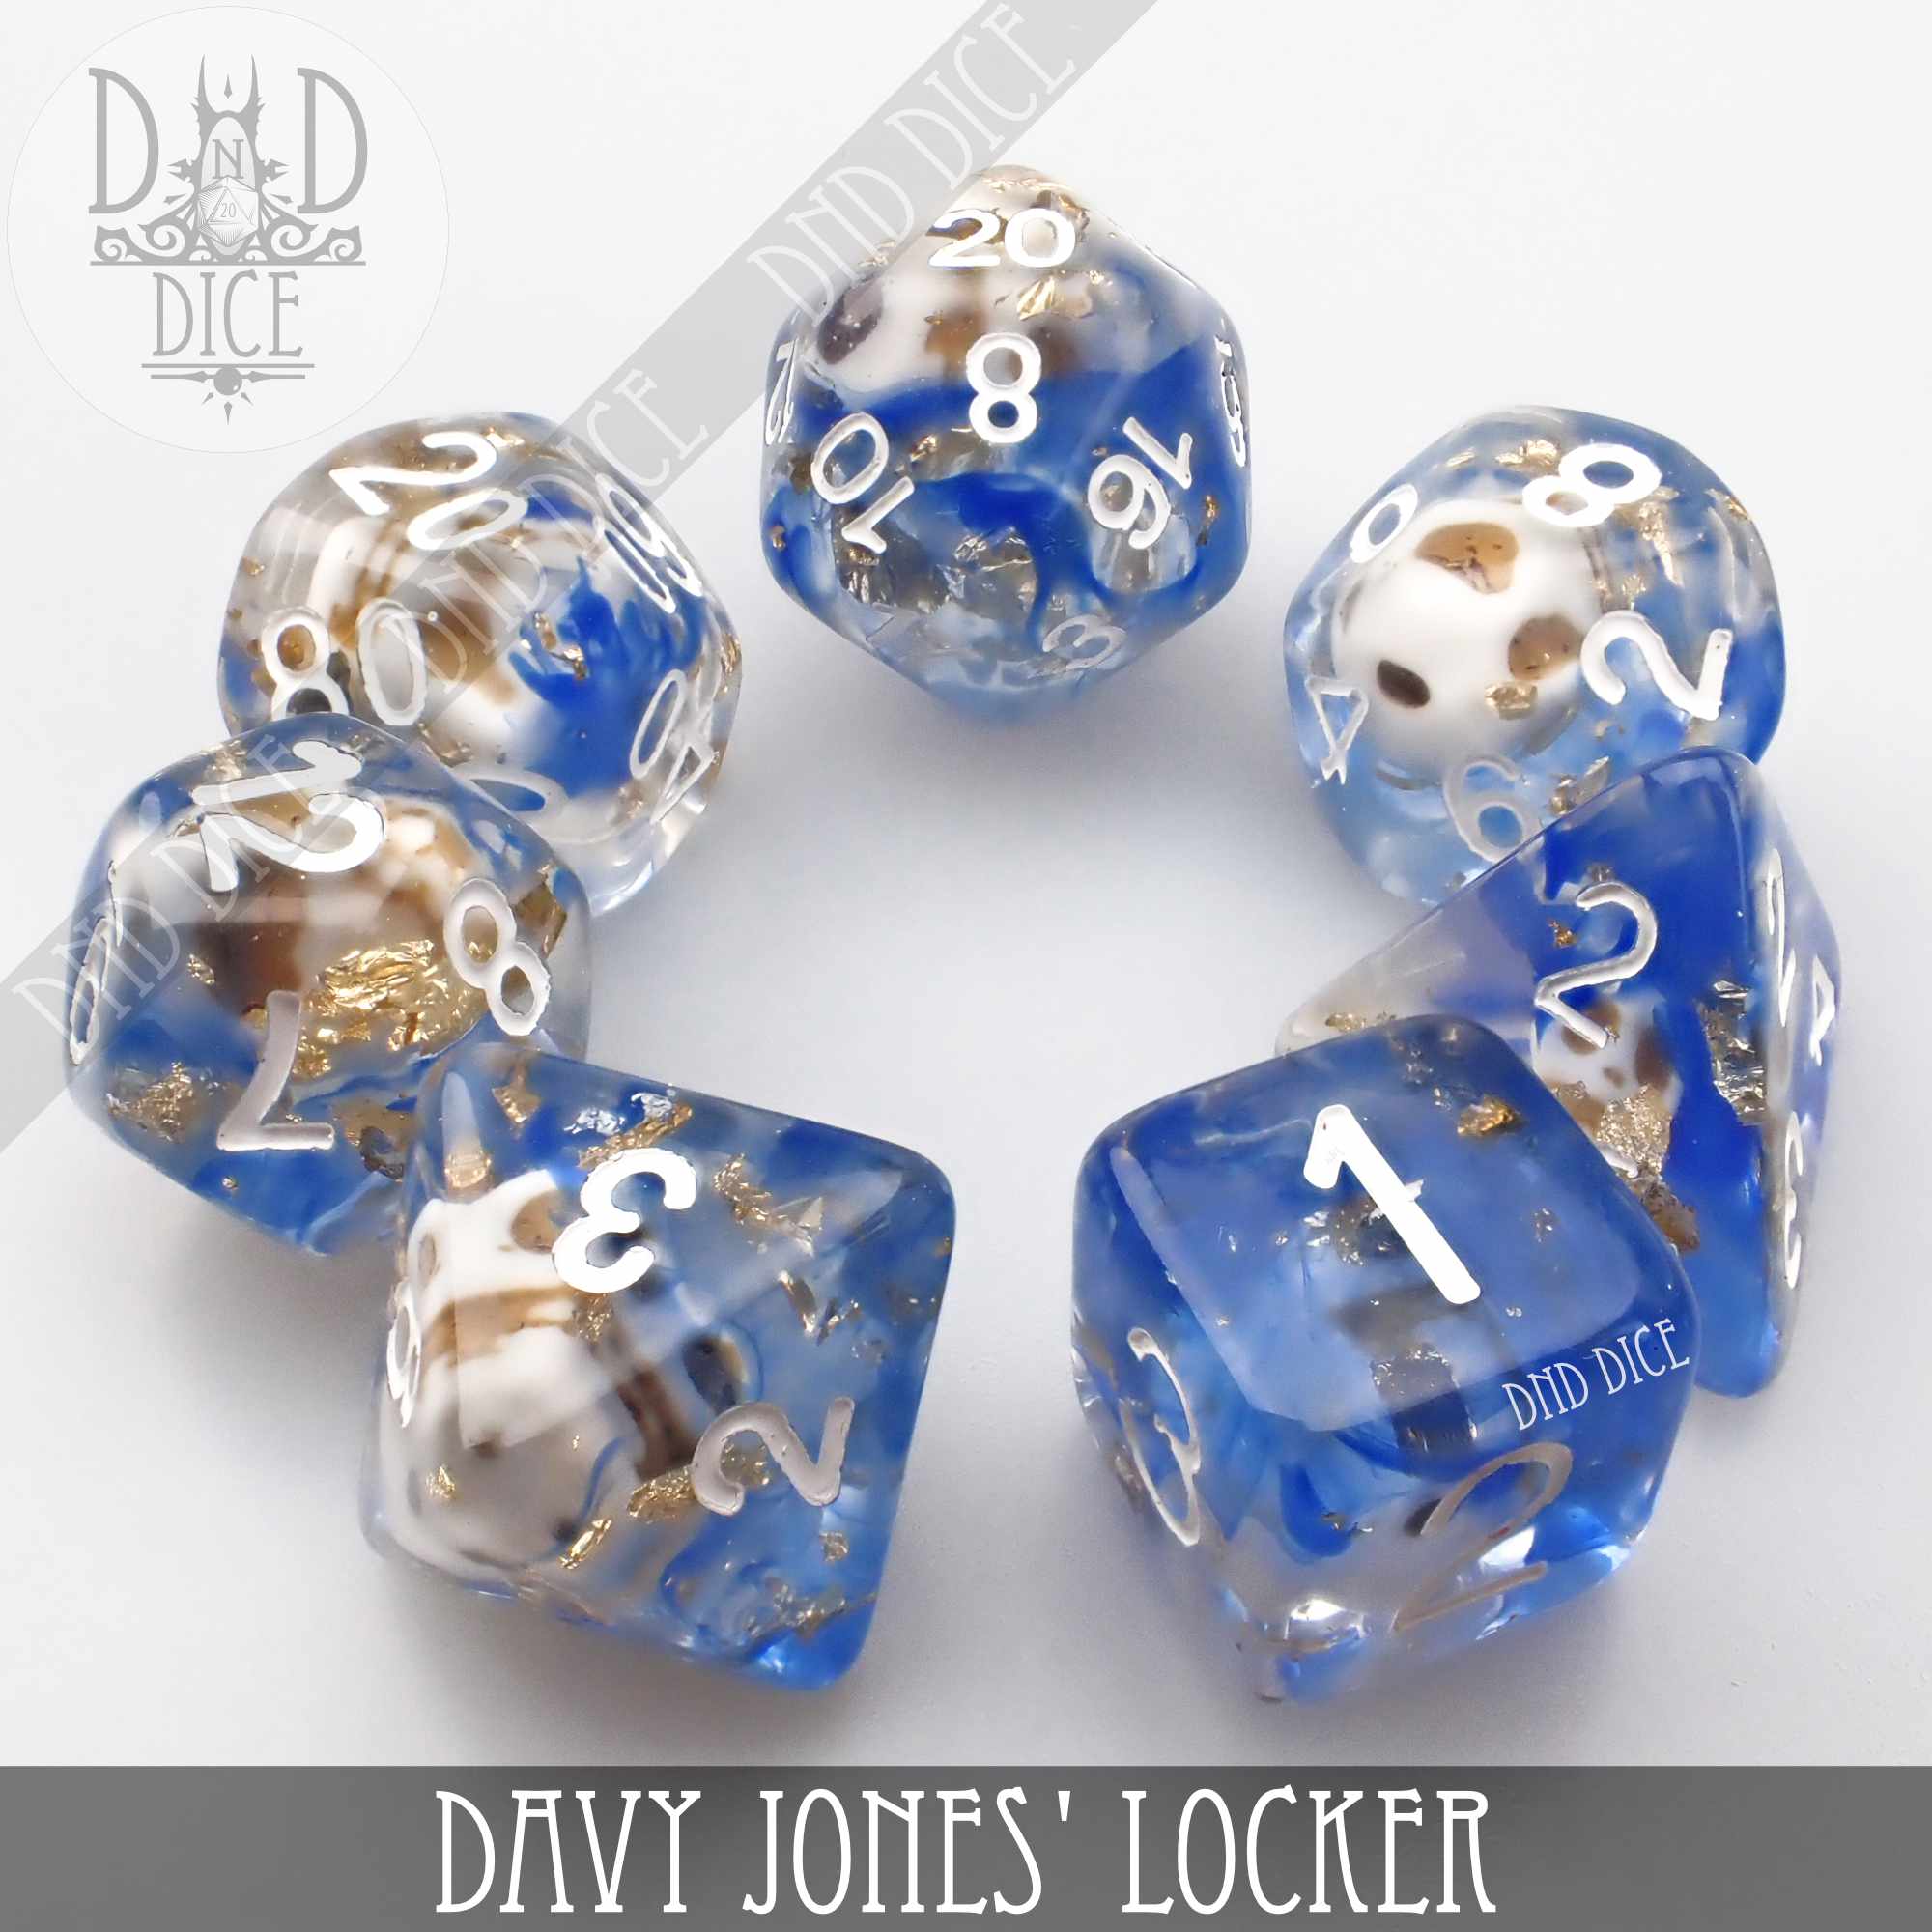 Davy Jones Locker Dice Set